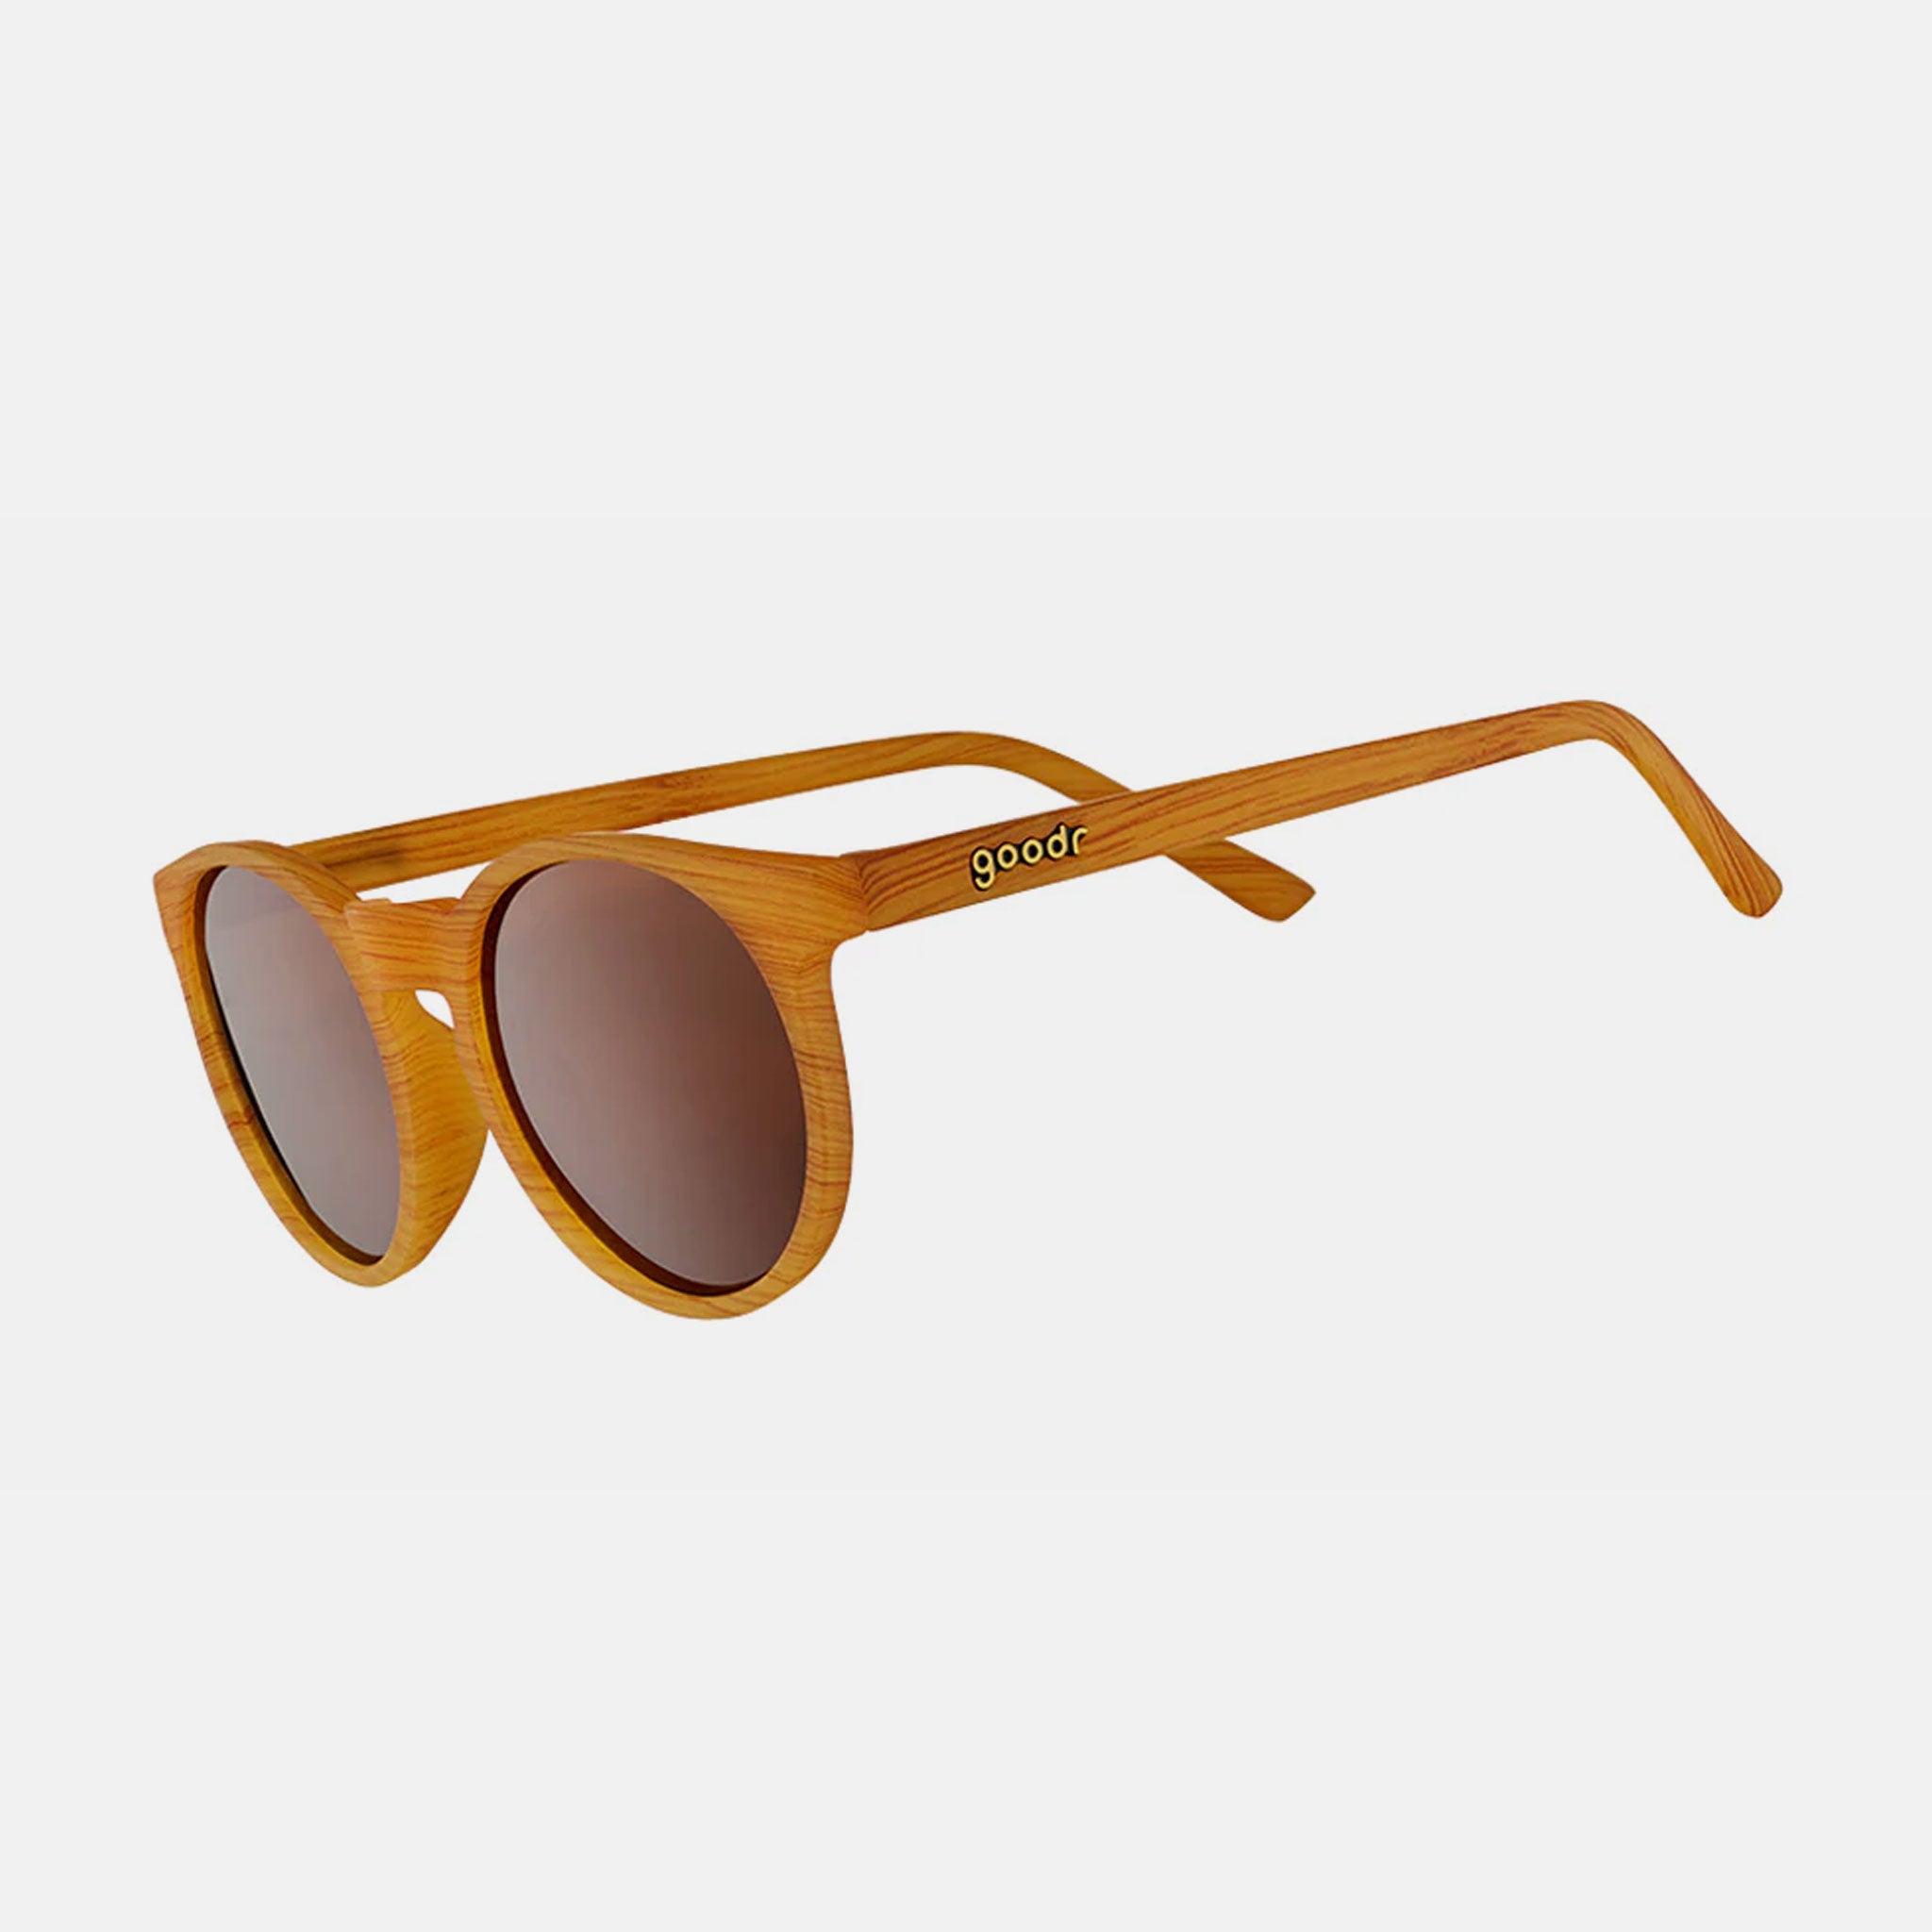 goodr-sunglasses-bodhis-ultimate-ride_01.jpg